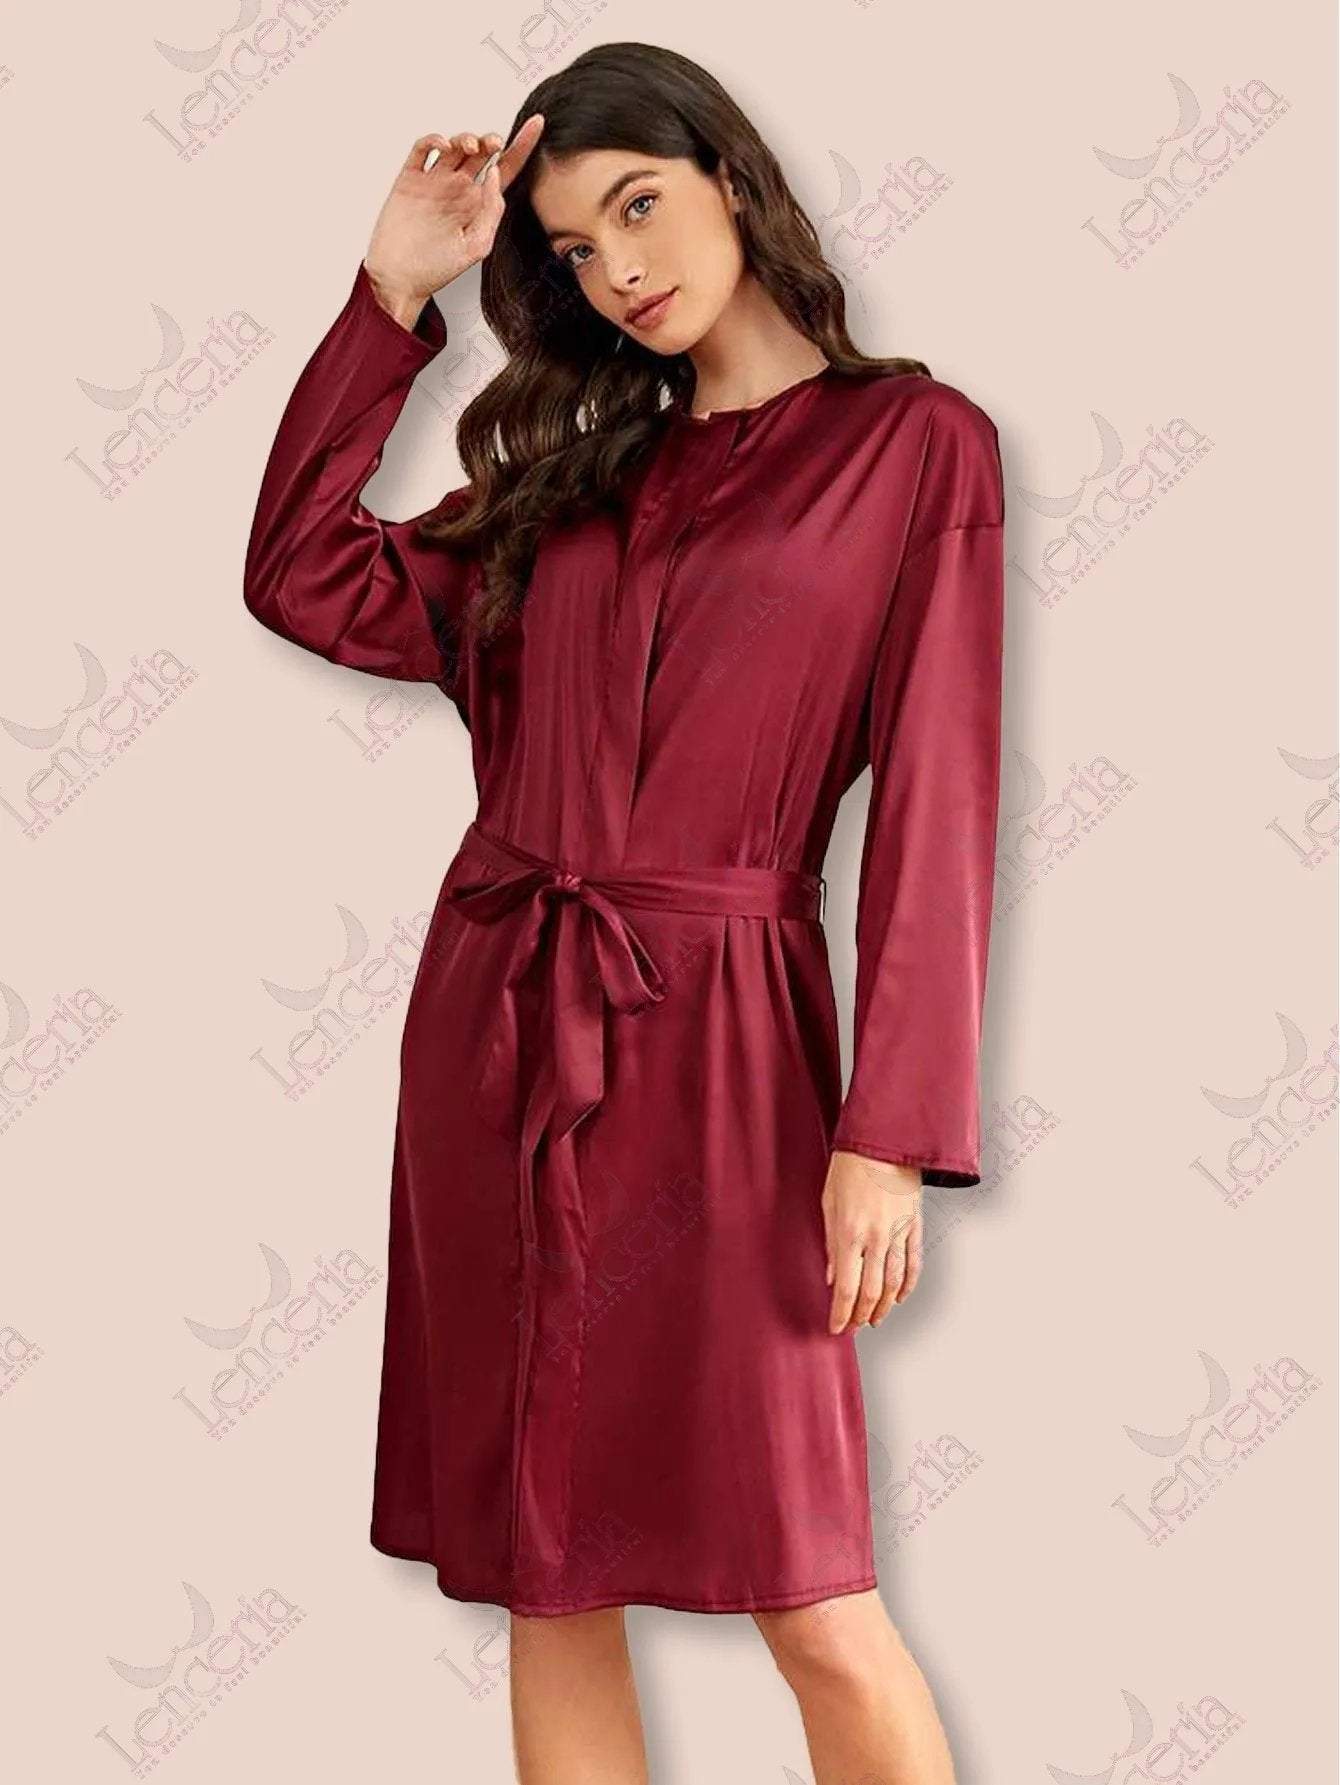 Voluptuousa fonce red robe - very elegant (m3)